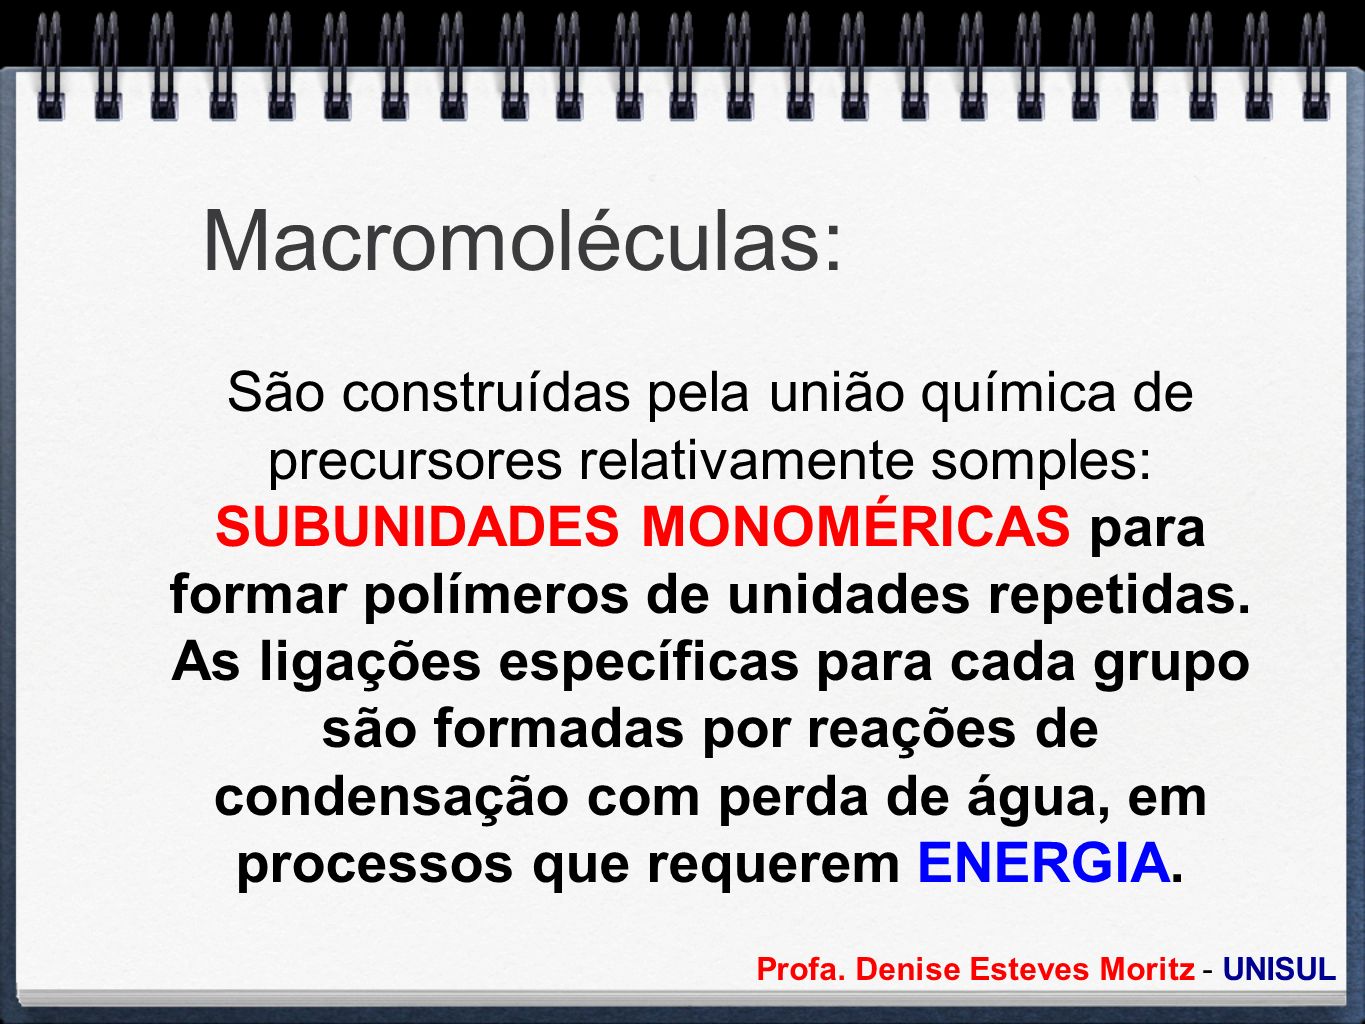 Macromoléculas: